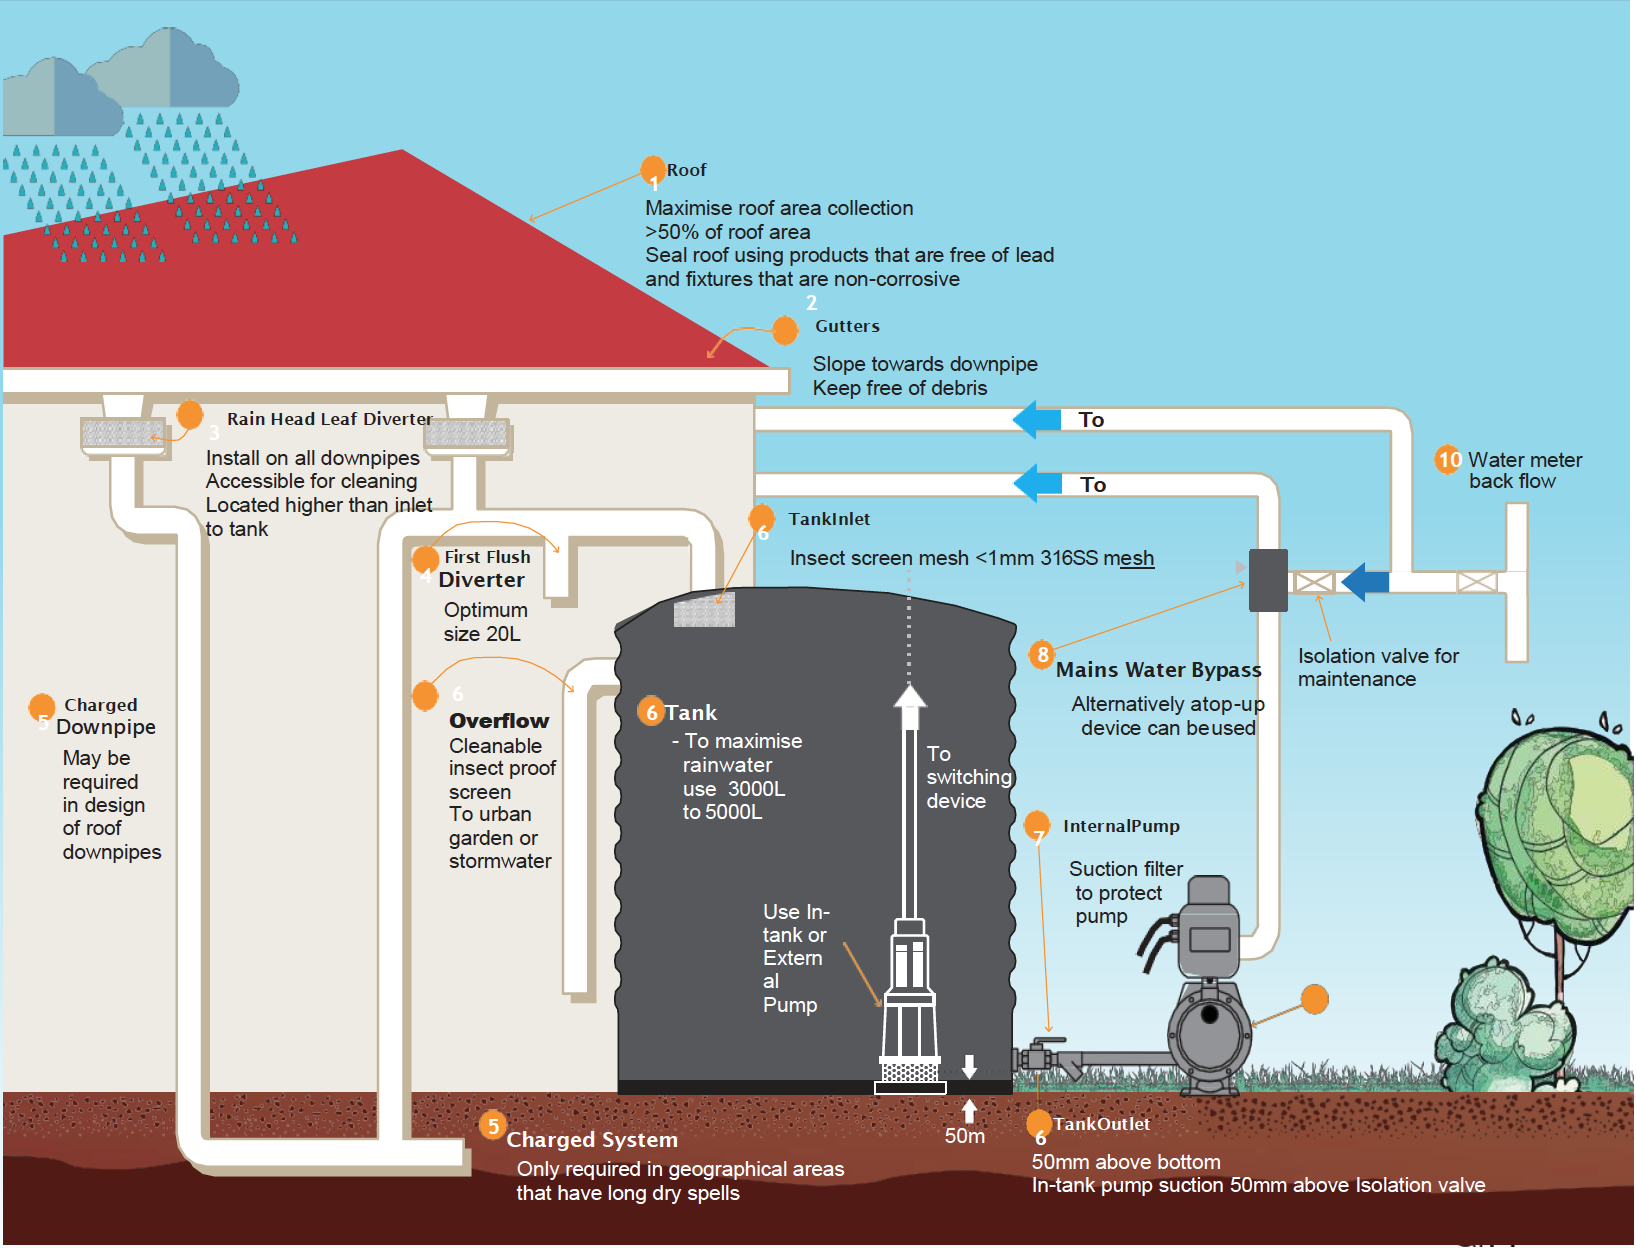 How do rainwater tanks work?